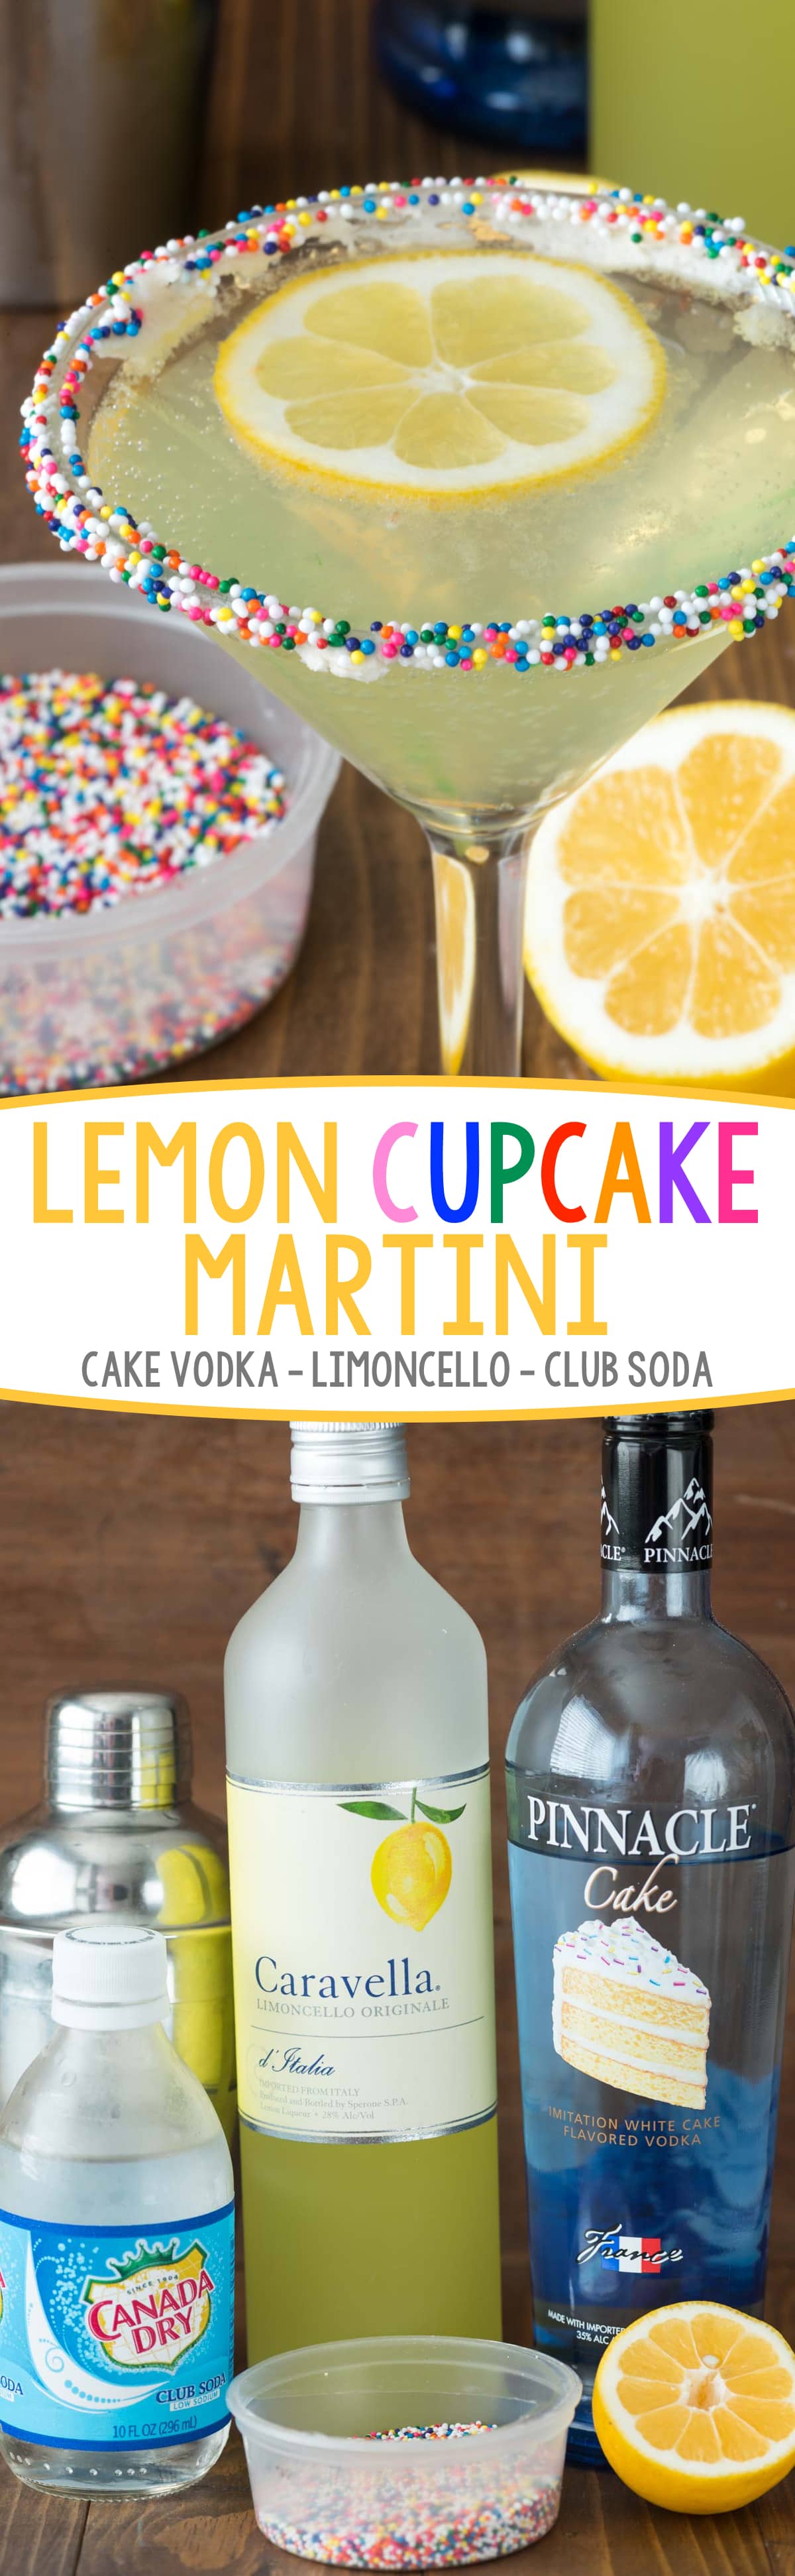 Lemon Cupcake Martini - only 3 ingredients in this easy martini recipe that tastes like a lemon cupcake!